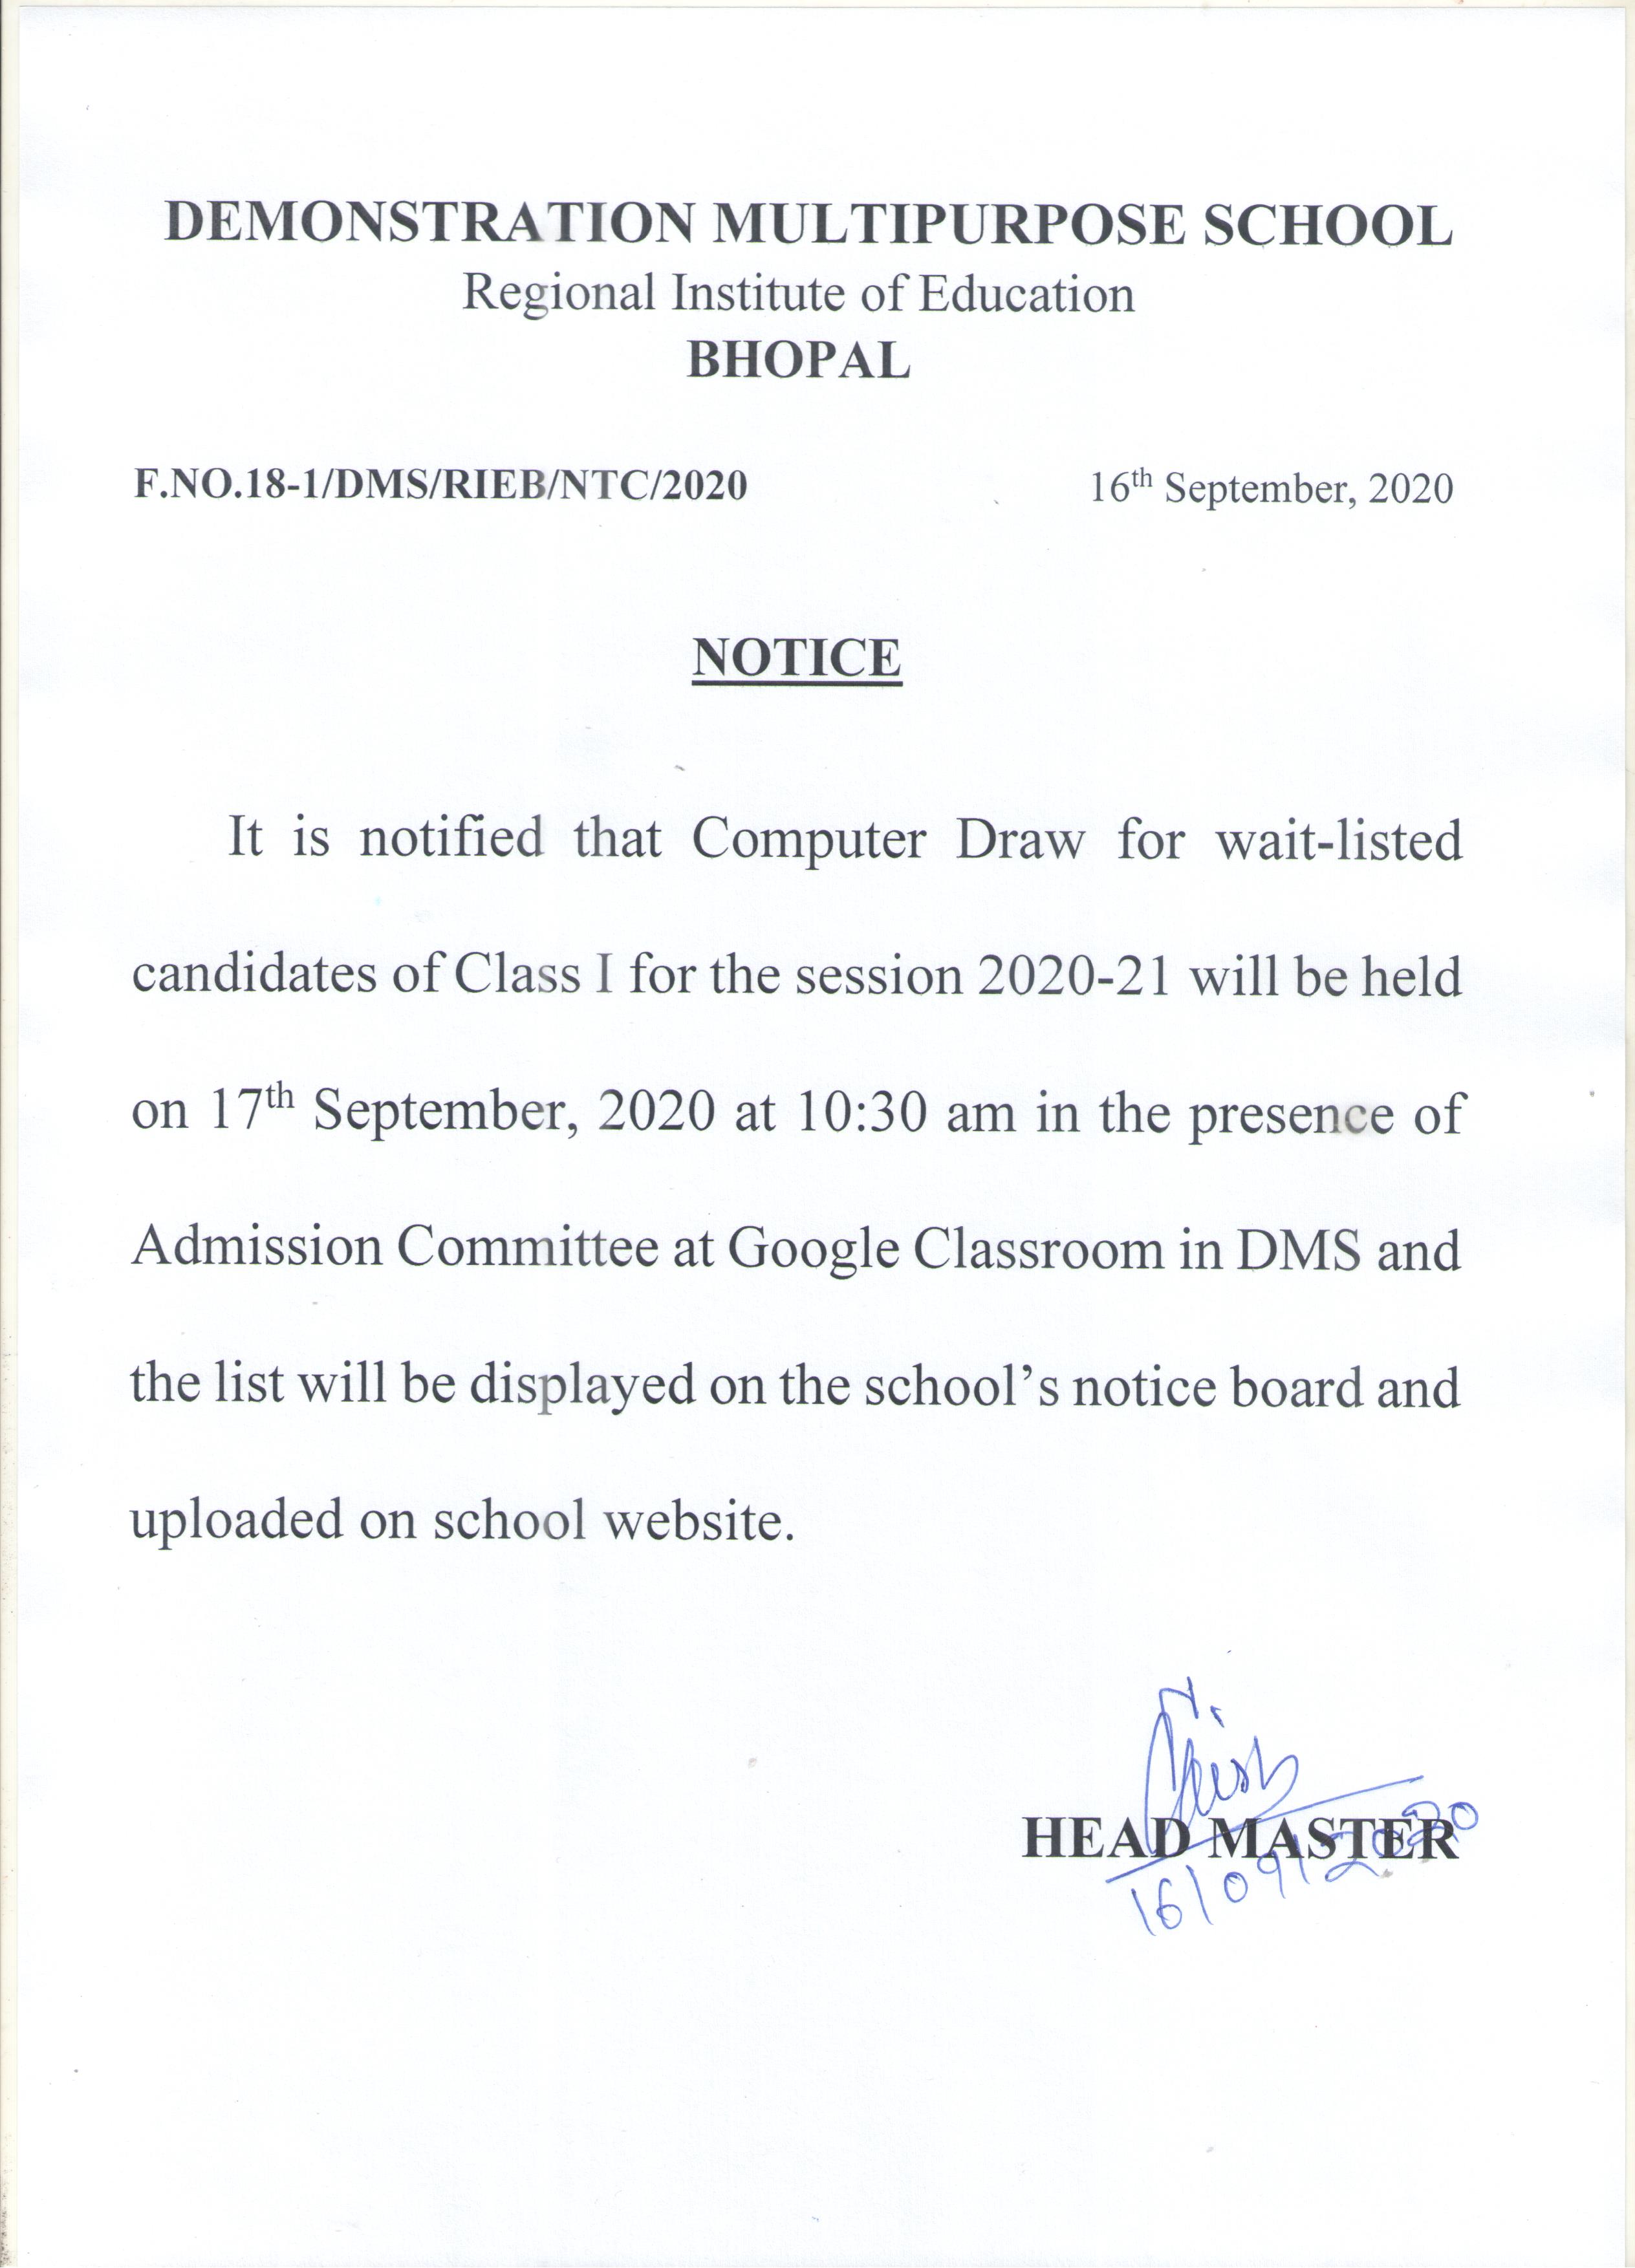 Demonstration Multipurpose School Bhopal ::